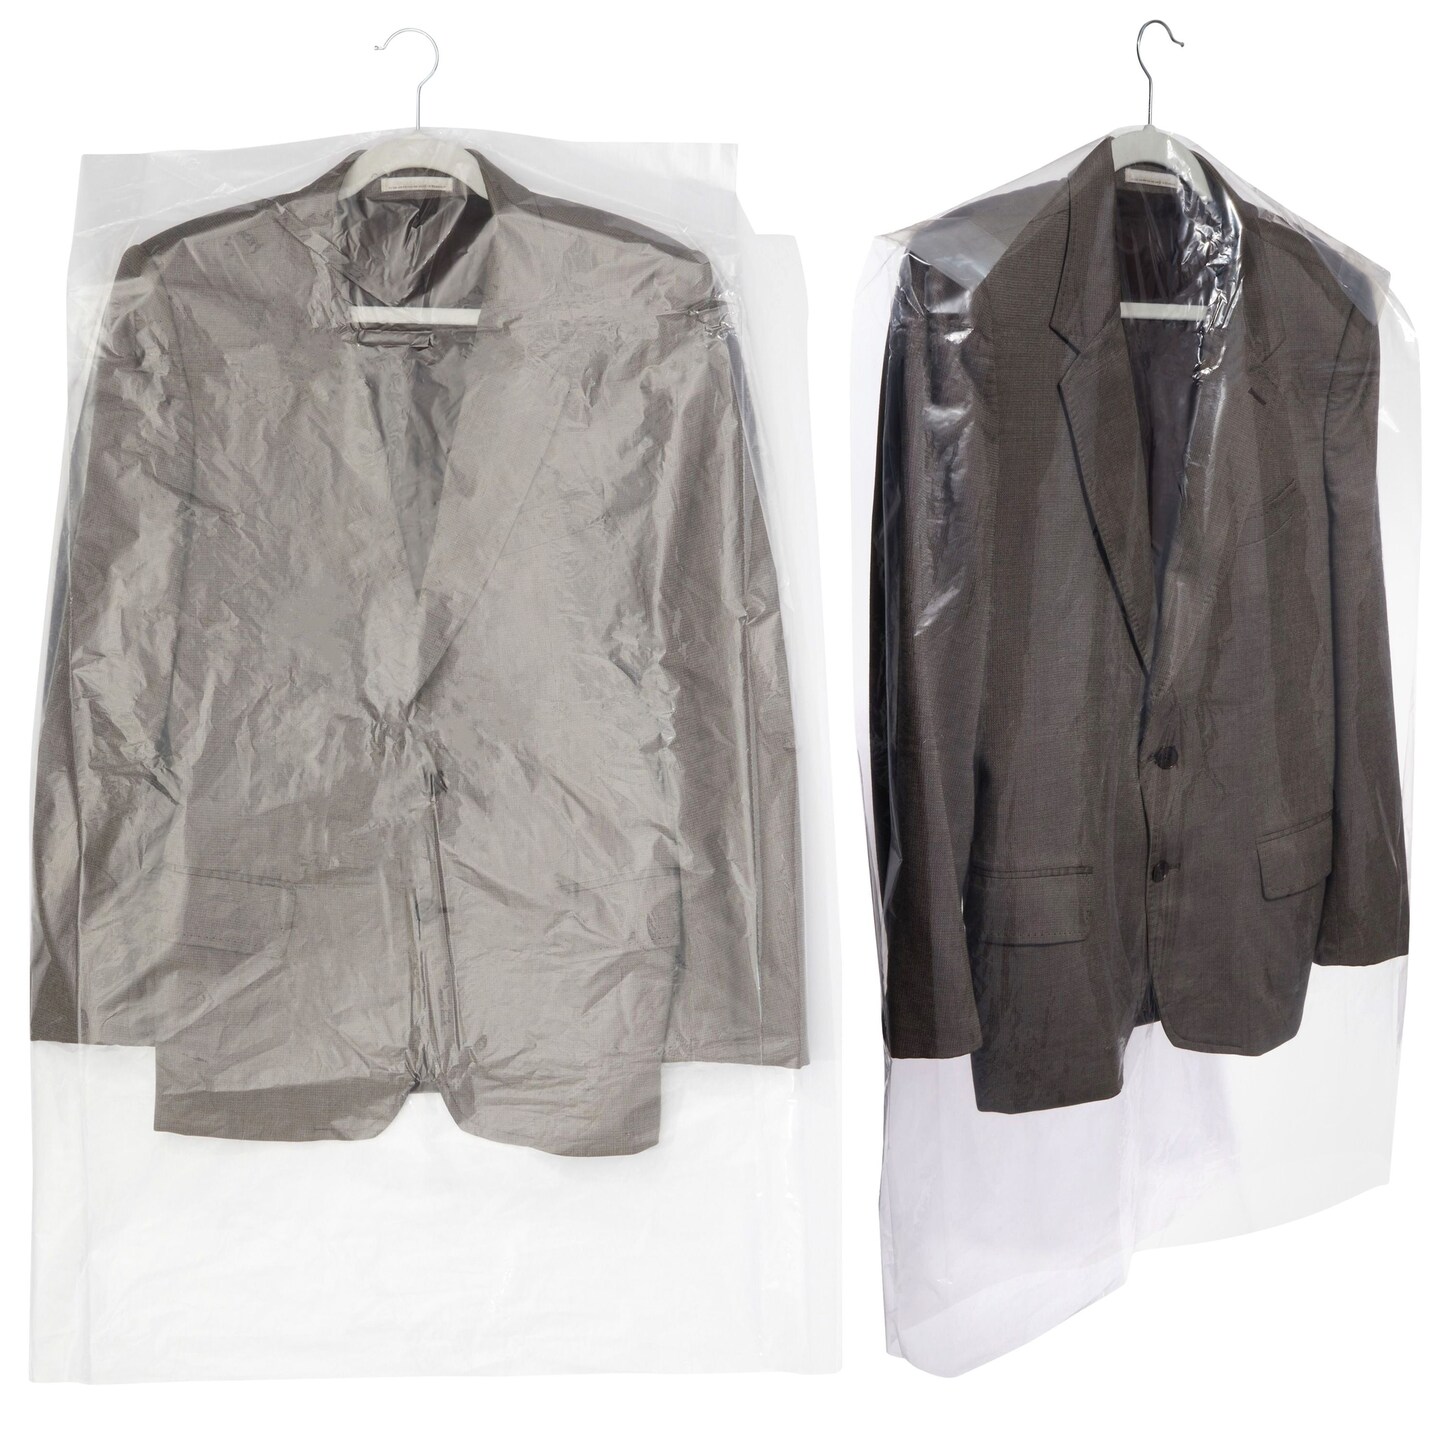 at Home 50-Pack Grey Velvet Suit Hangers